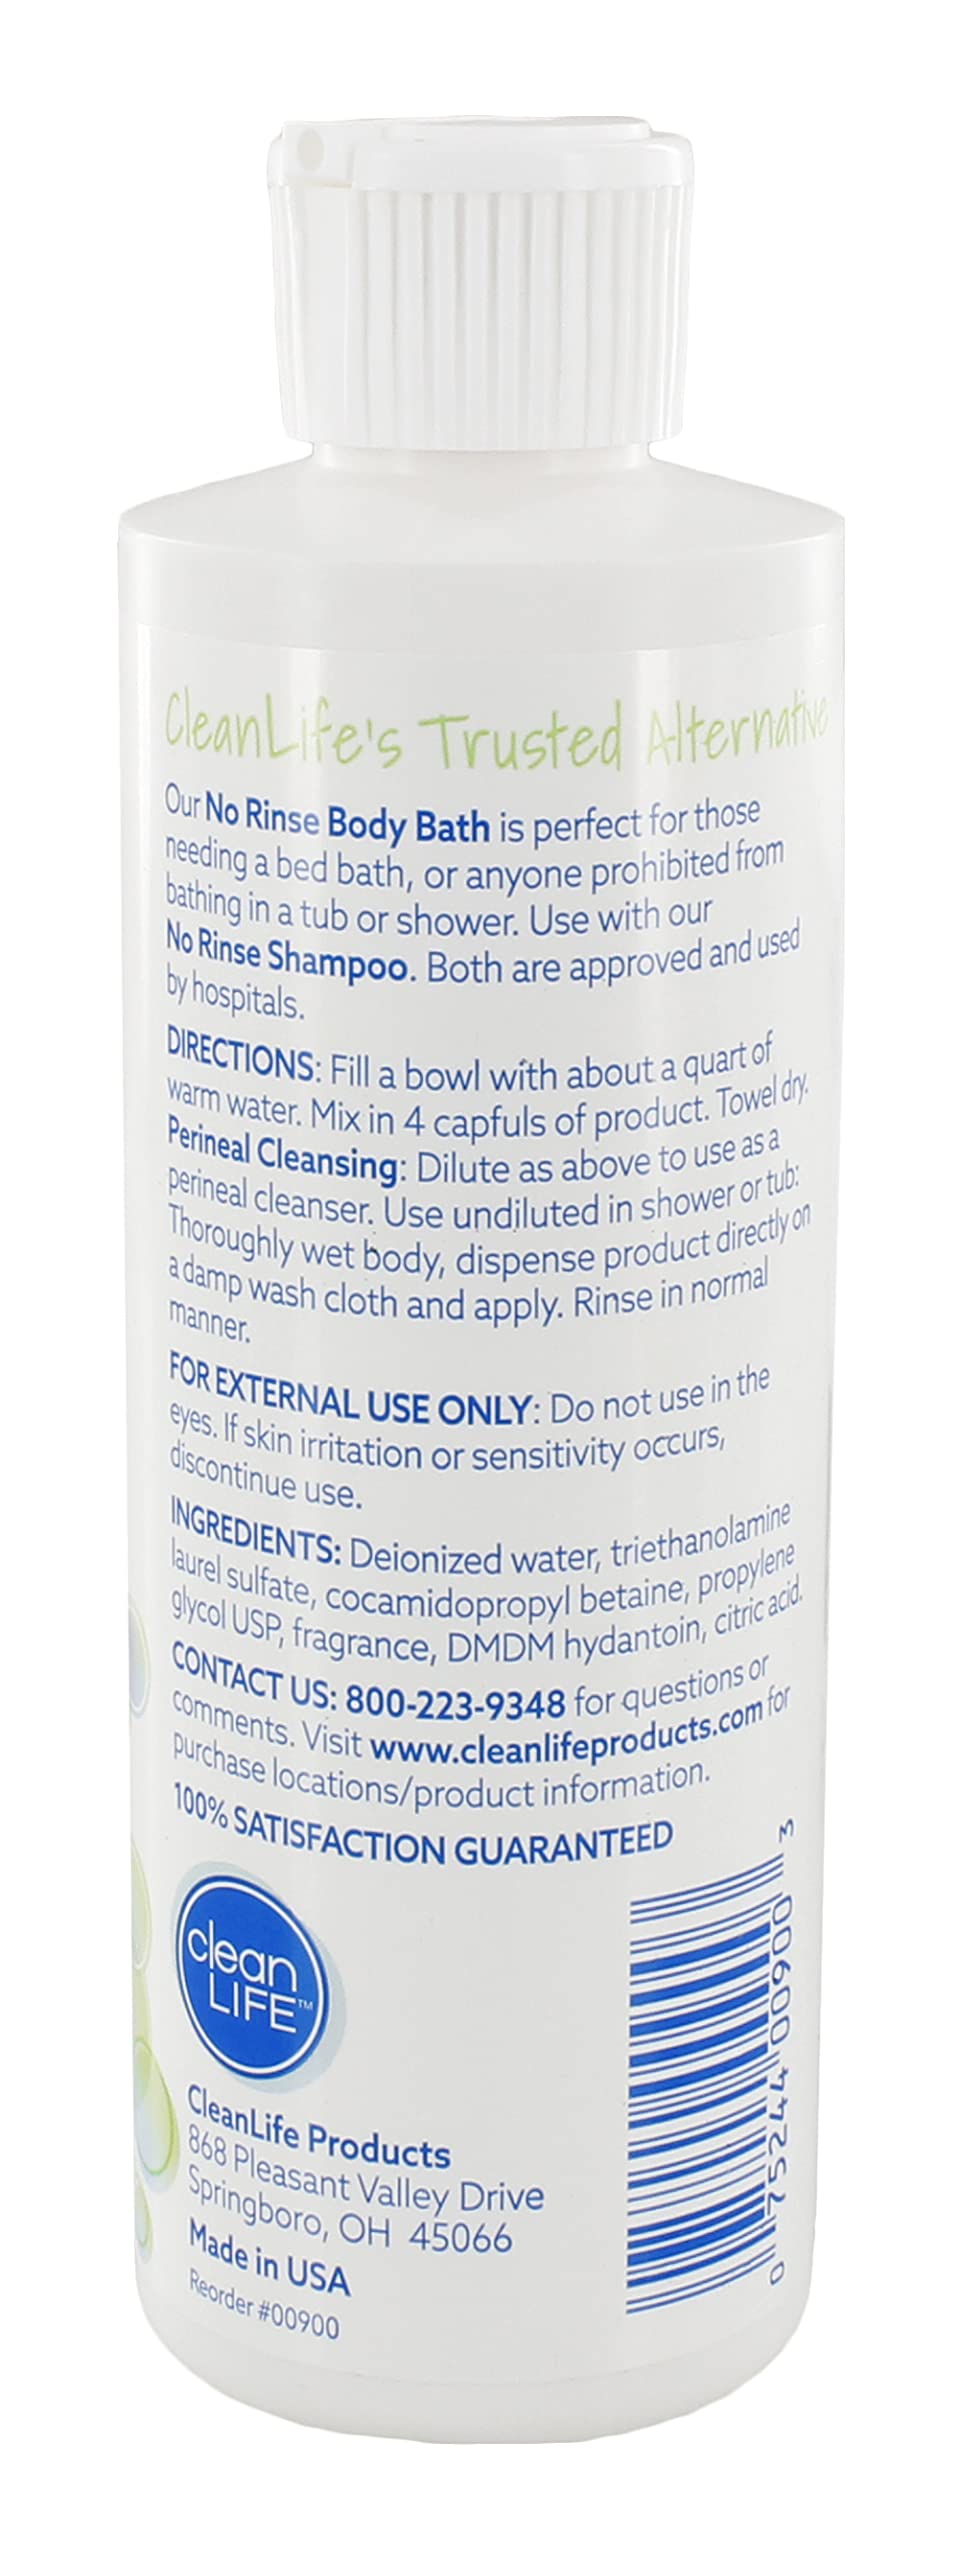 No-Rinse Body Bath, 8 fl oz - Leaves Skin Clean, Refreshed and Odor-Free, Rinse-Free Formula - Makes 8 Complete Baths